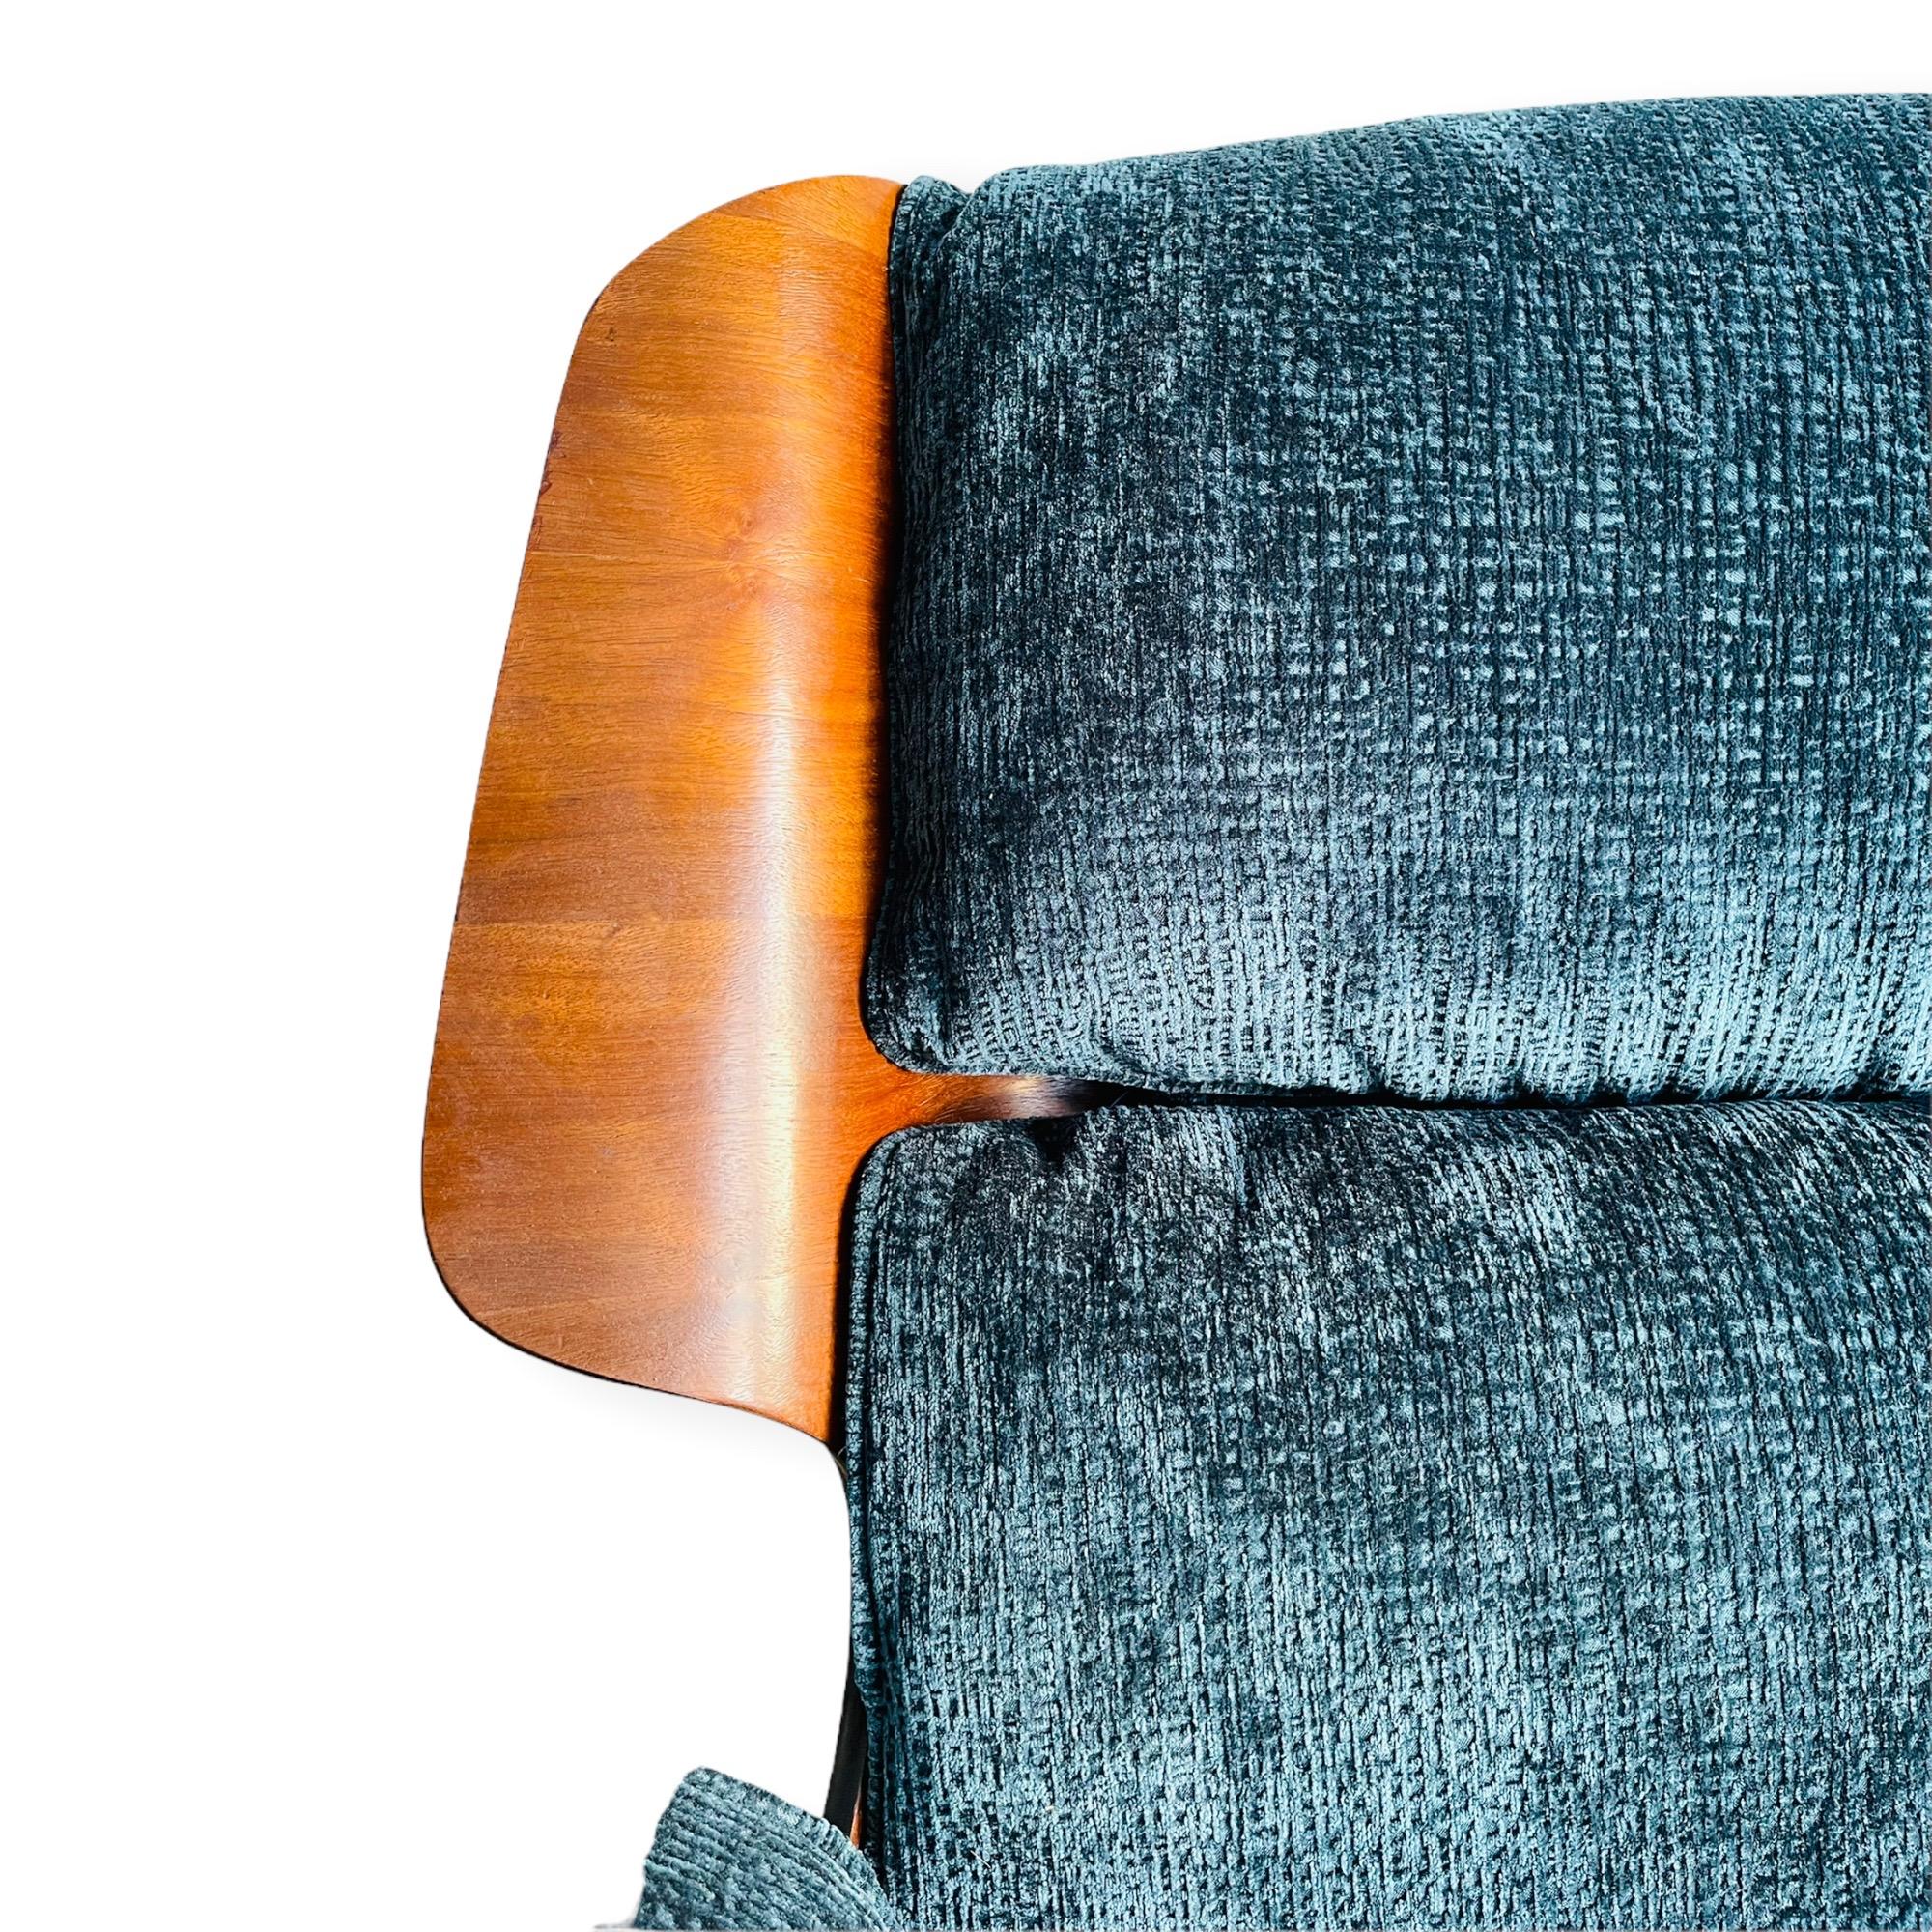 Kipp Stewart Lounge Chair & Ottoman by Drexel Declaration 2